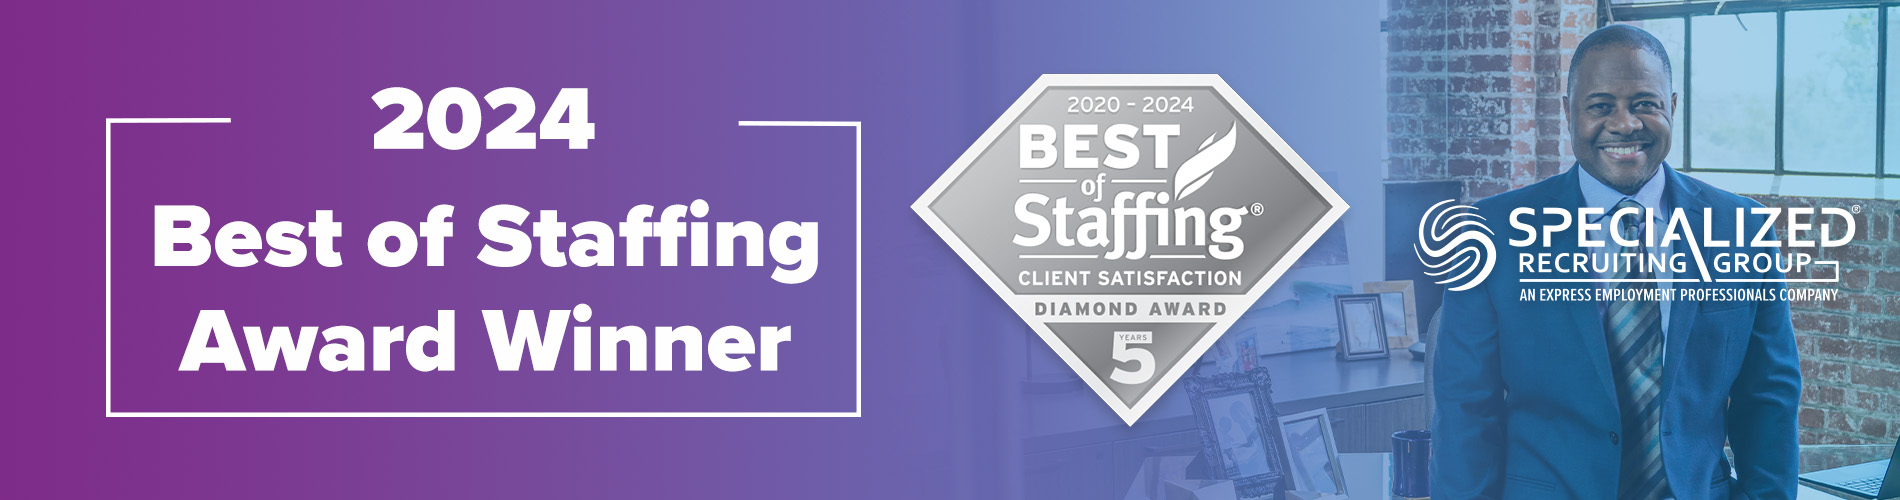 Best of Staffing Awards 2024